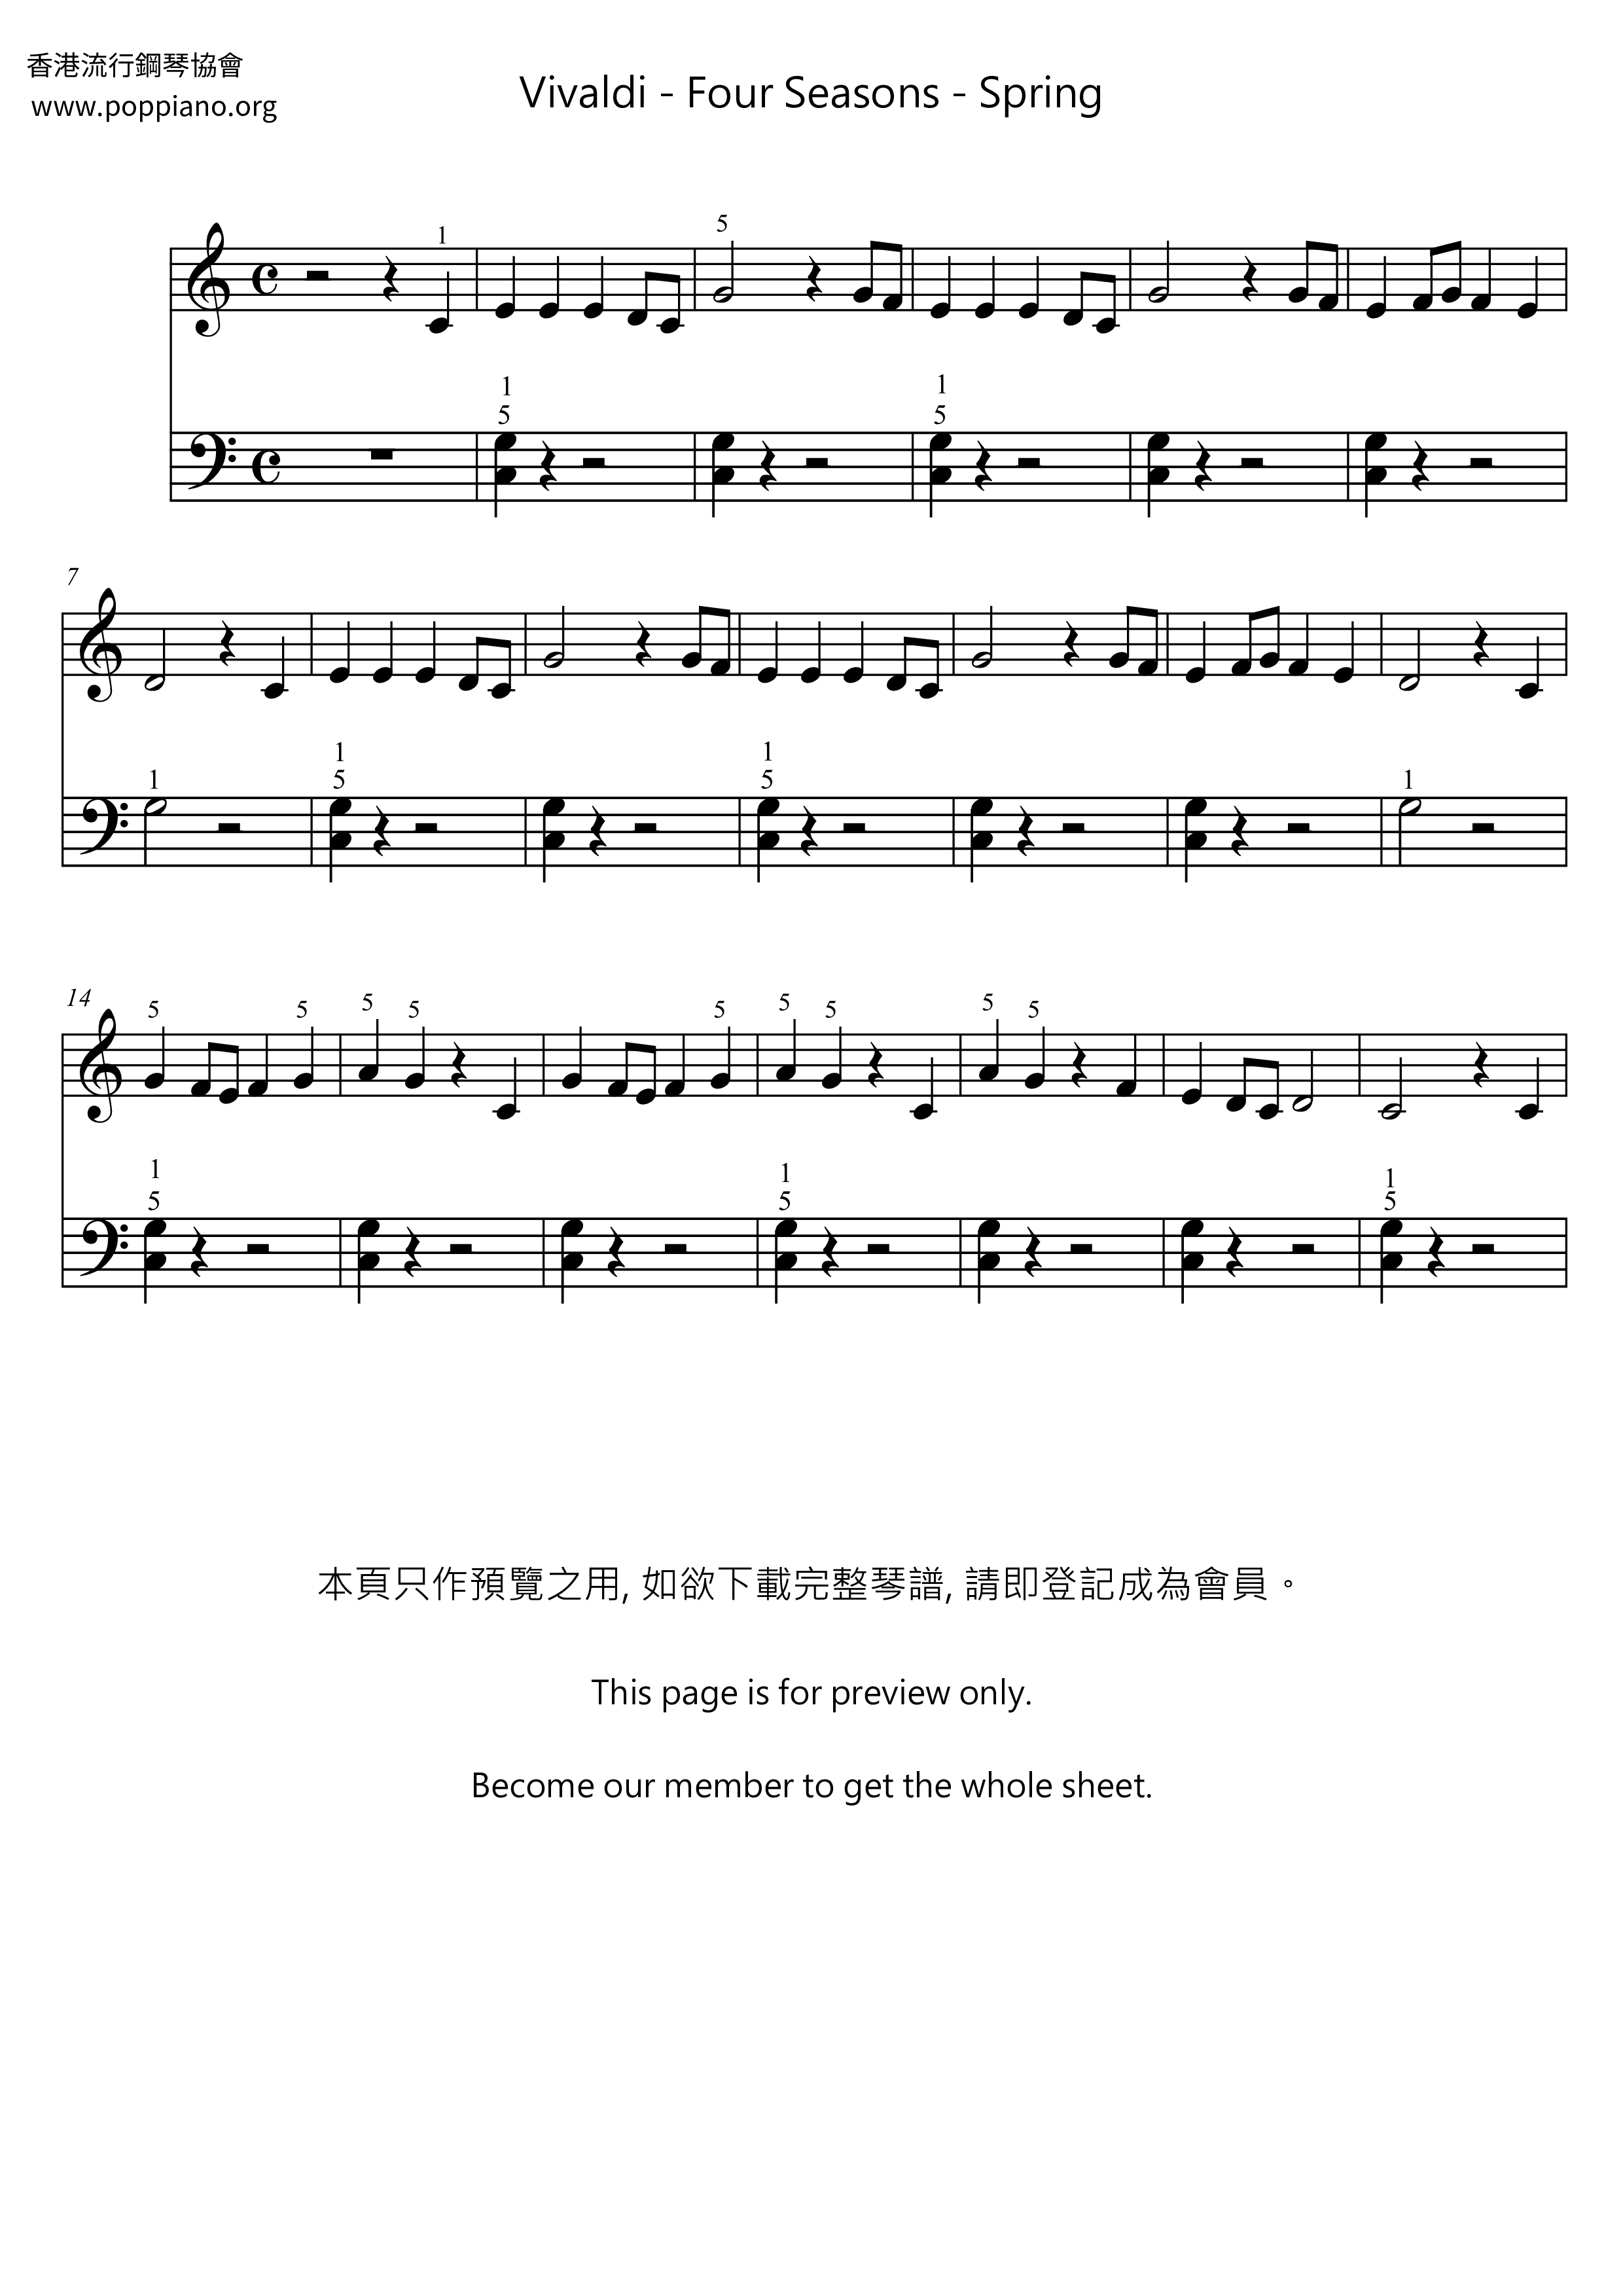 The Four Seasons - Spring in E Major, RV. 269: I. Allegro Score